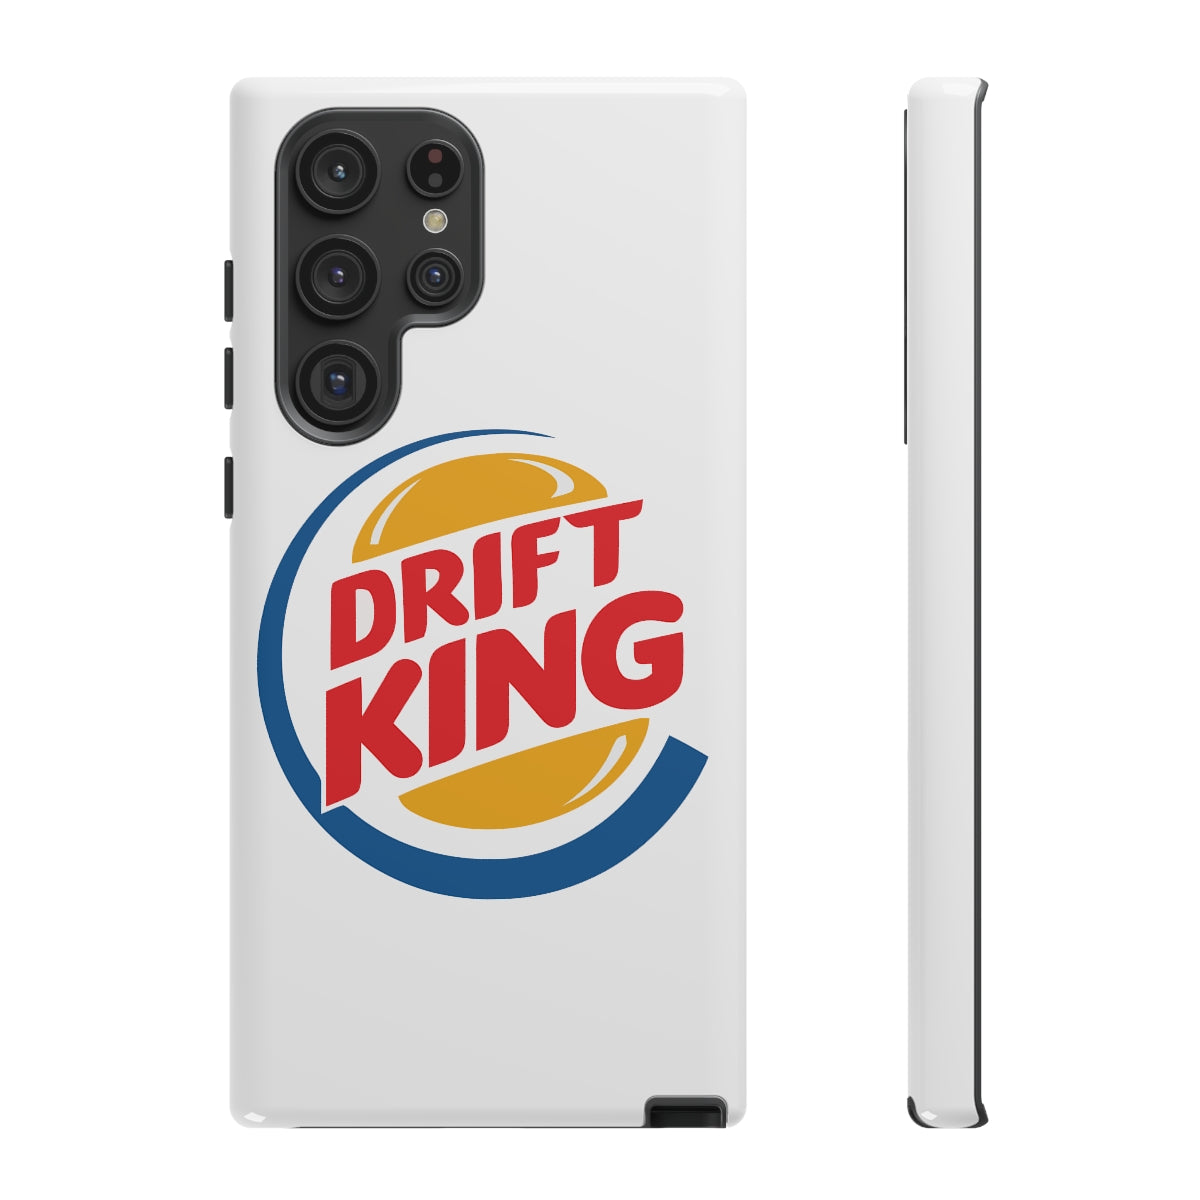 Drift King - Car Phone Case - Samsung Galaxy S22 Ultra